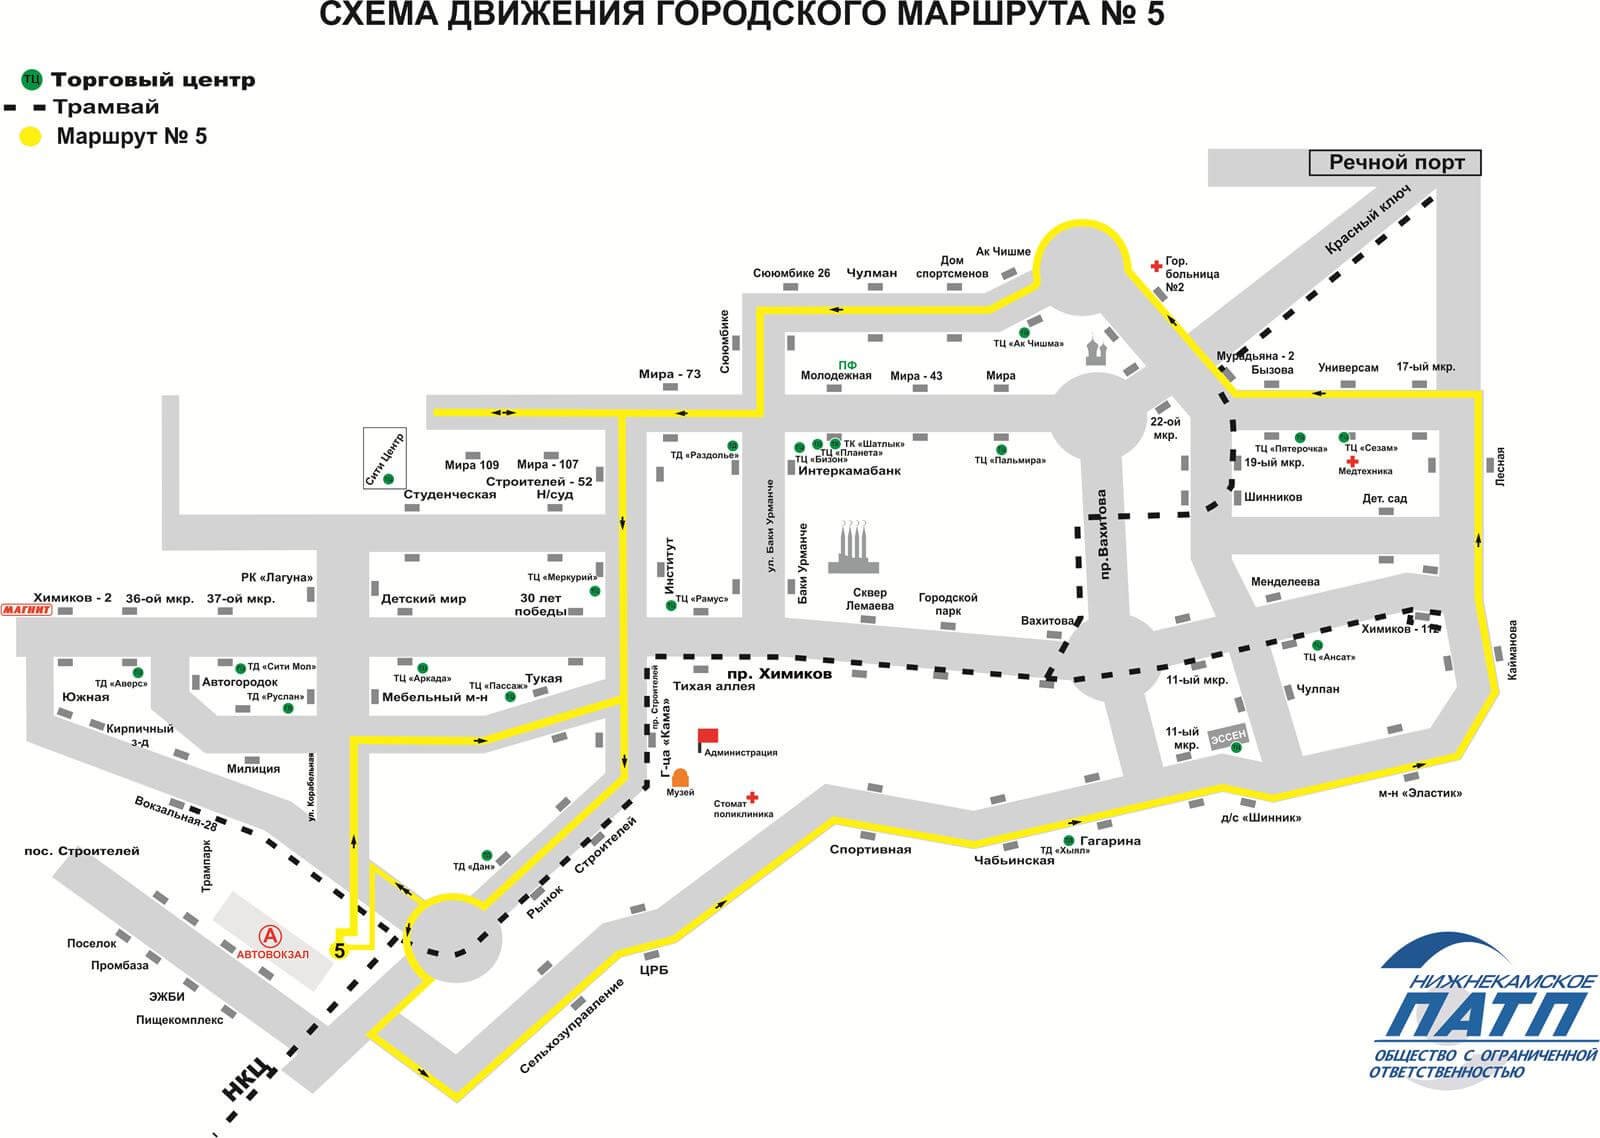 НПАТП маршруты схема 5 маршрута 14.12.2016